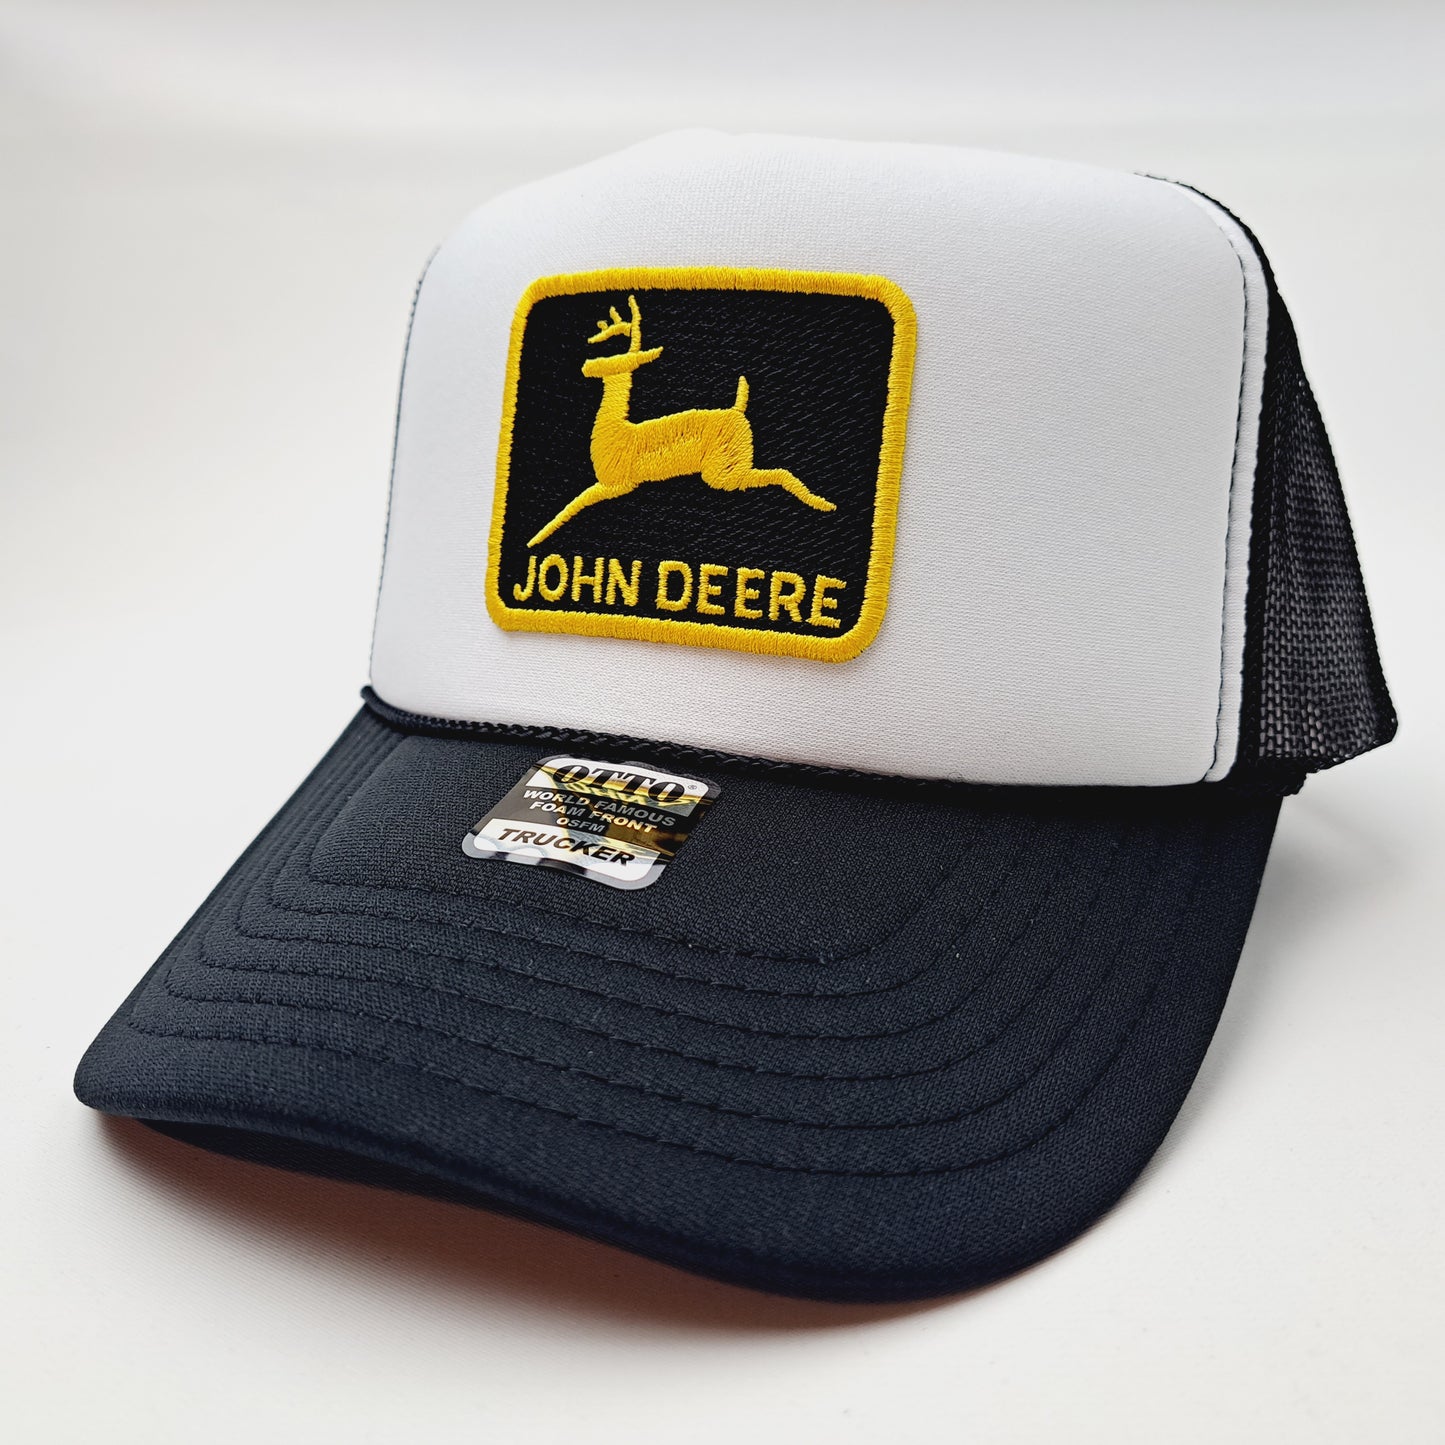 John Deere Embroidered Patch Foam Trucker Mesh Cap Hat Black Snapback